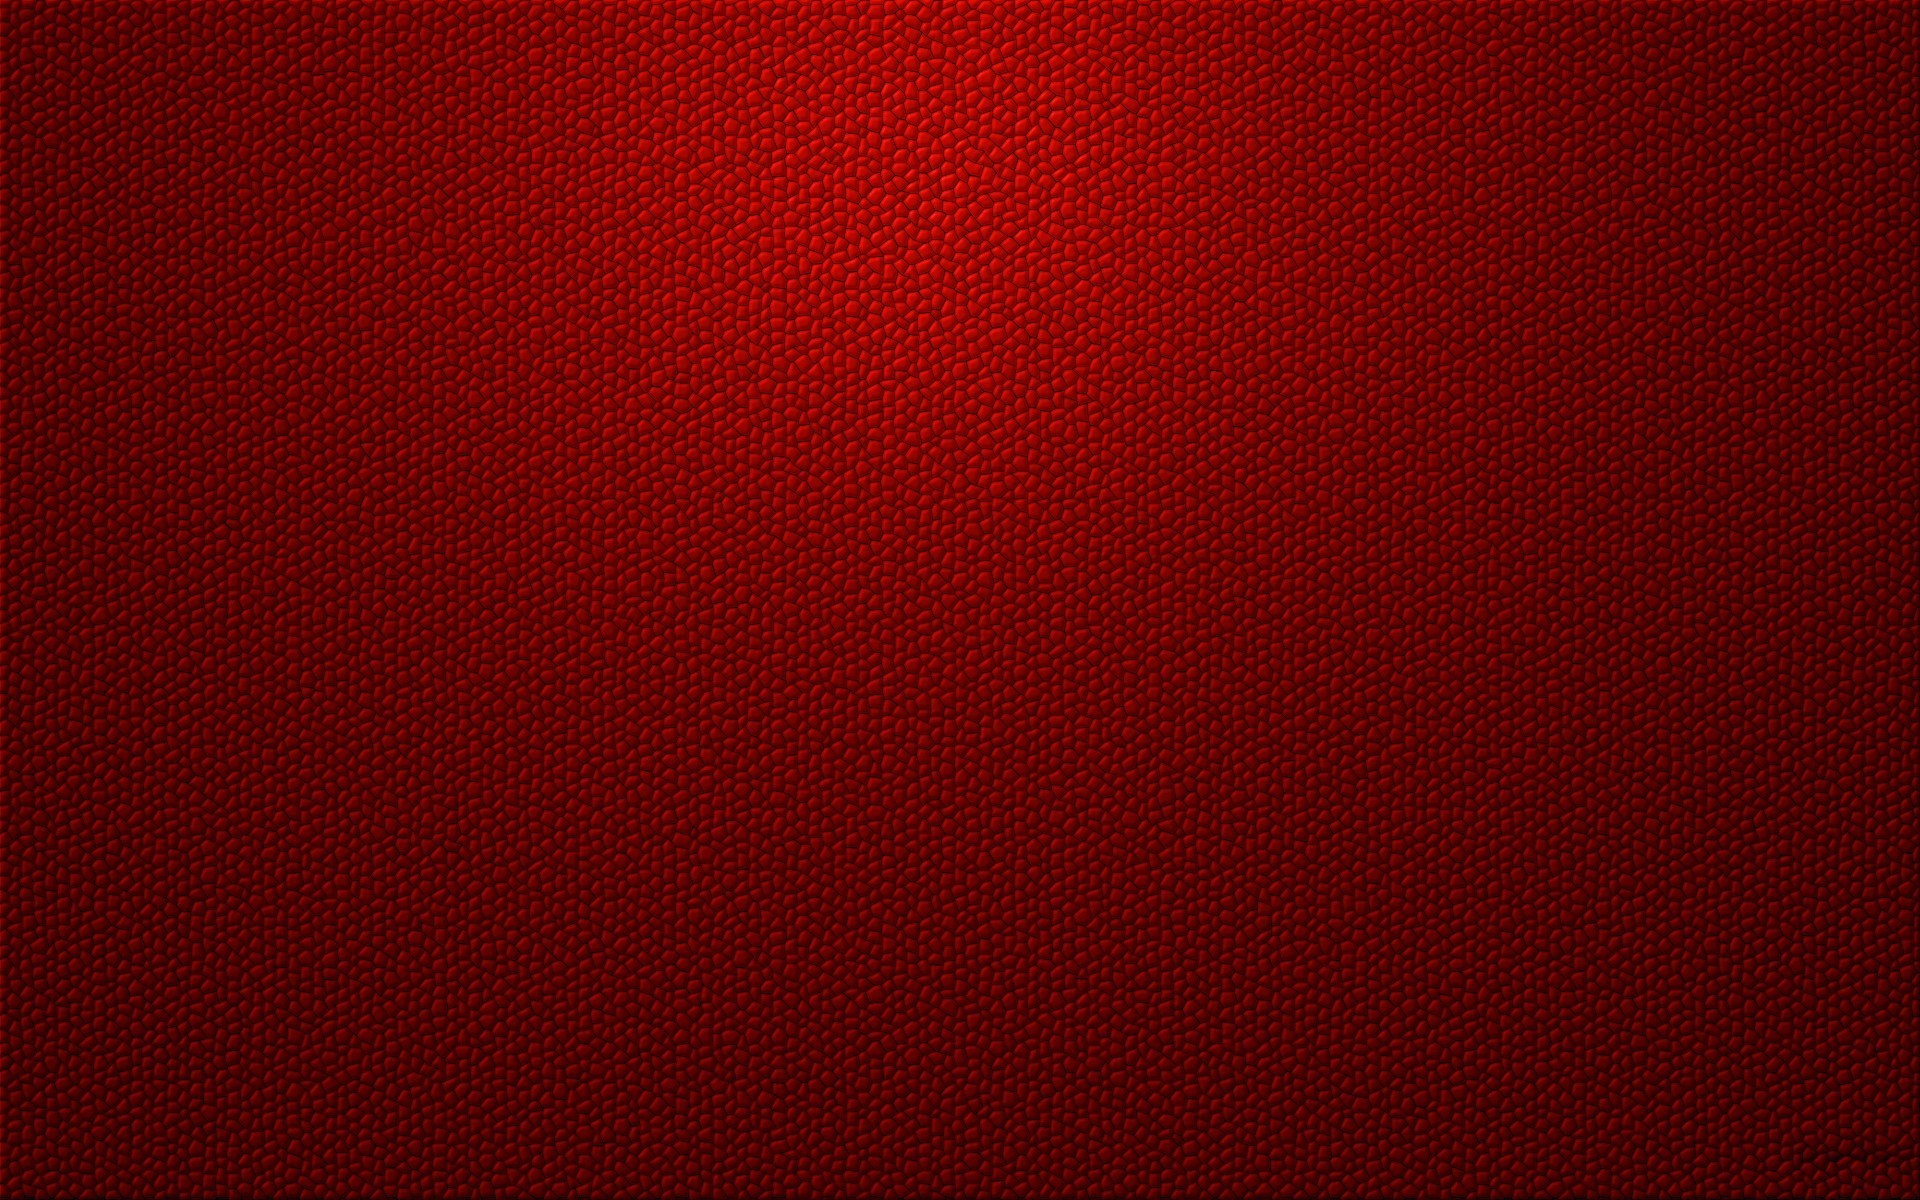 1920x1200 Hd Pattern Wallpaper 32791 Free Wallpaper in HD - Res: 1920x1080 ... | art/ backgrounds | Pinterest | Pattern wallpaper and Wallpaper